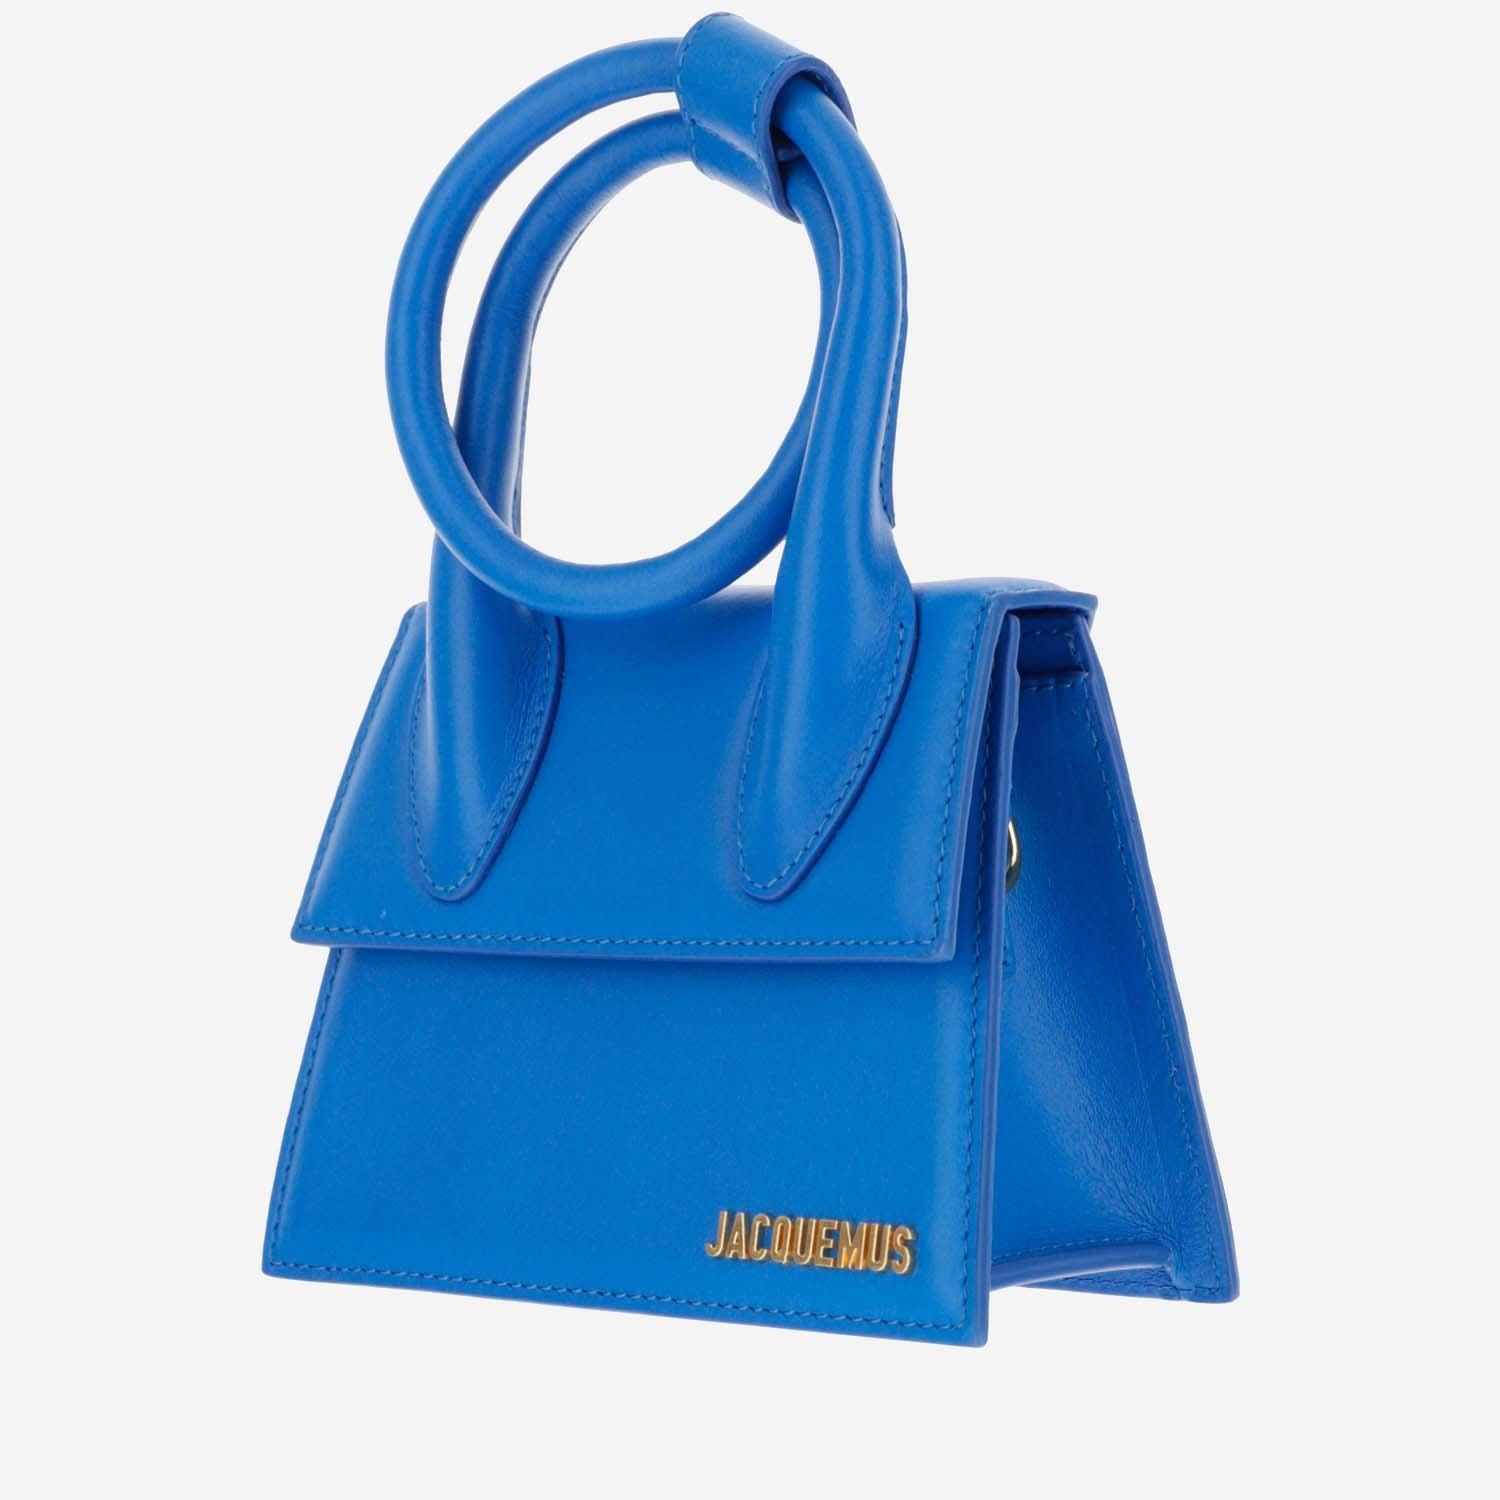 Jacquemus Bags in Blue